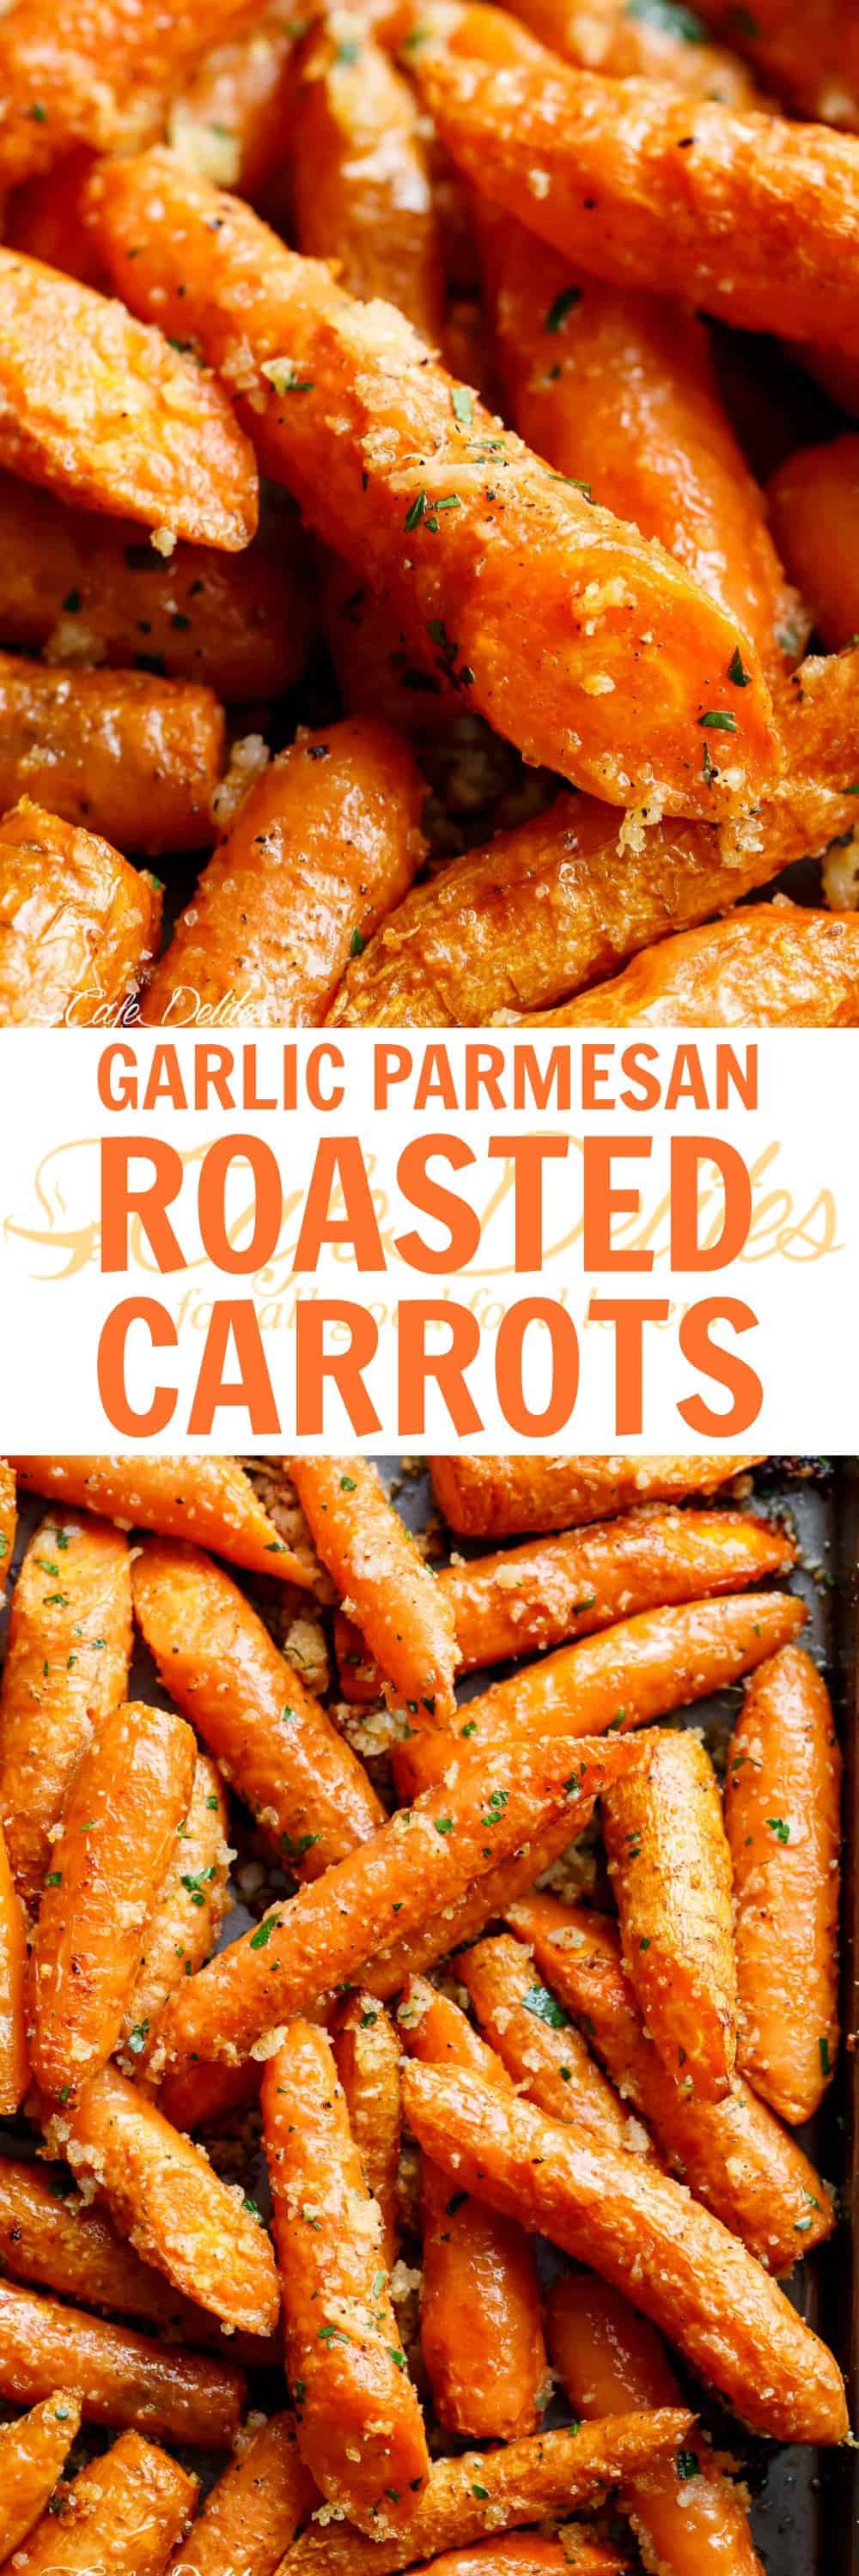 Parmesan Roasted Carrots Recipe - Cafe Delites